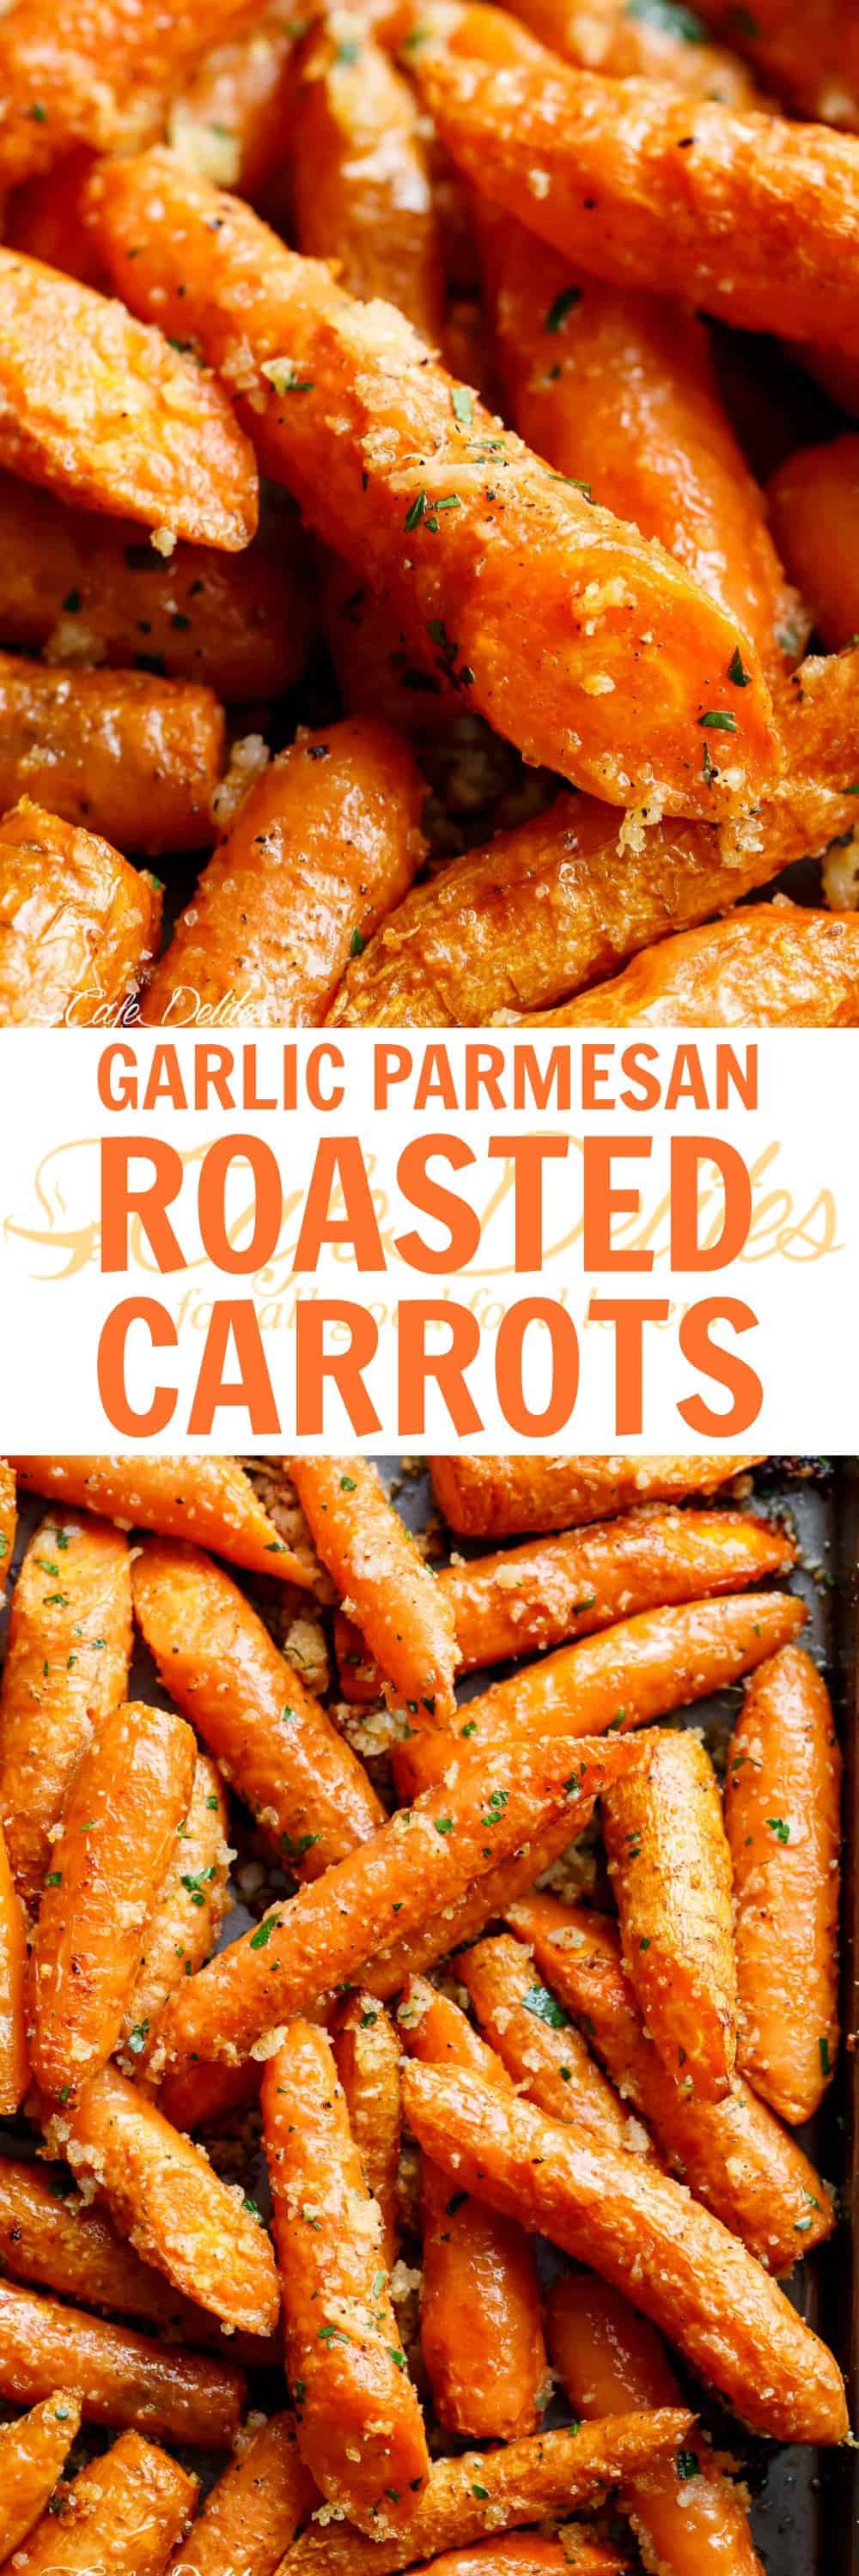 Parmesan Roasted Carrots Recipe - Cafe Delites